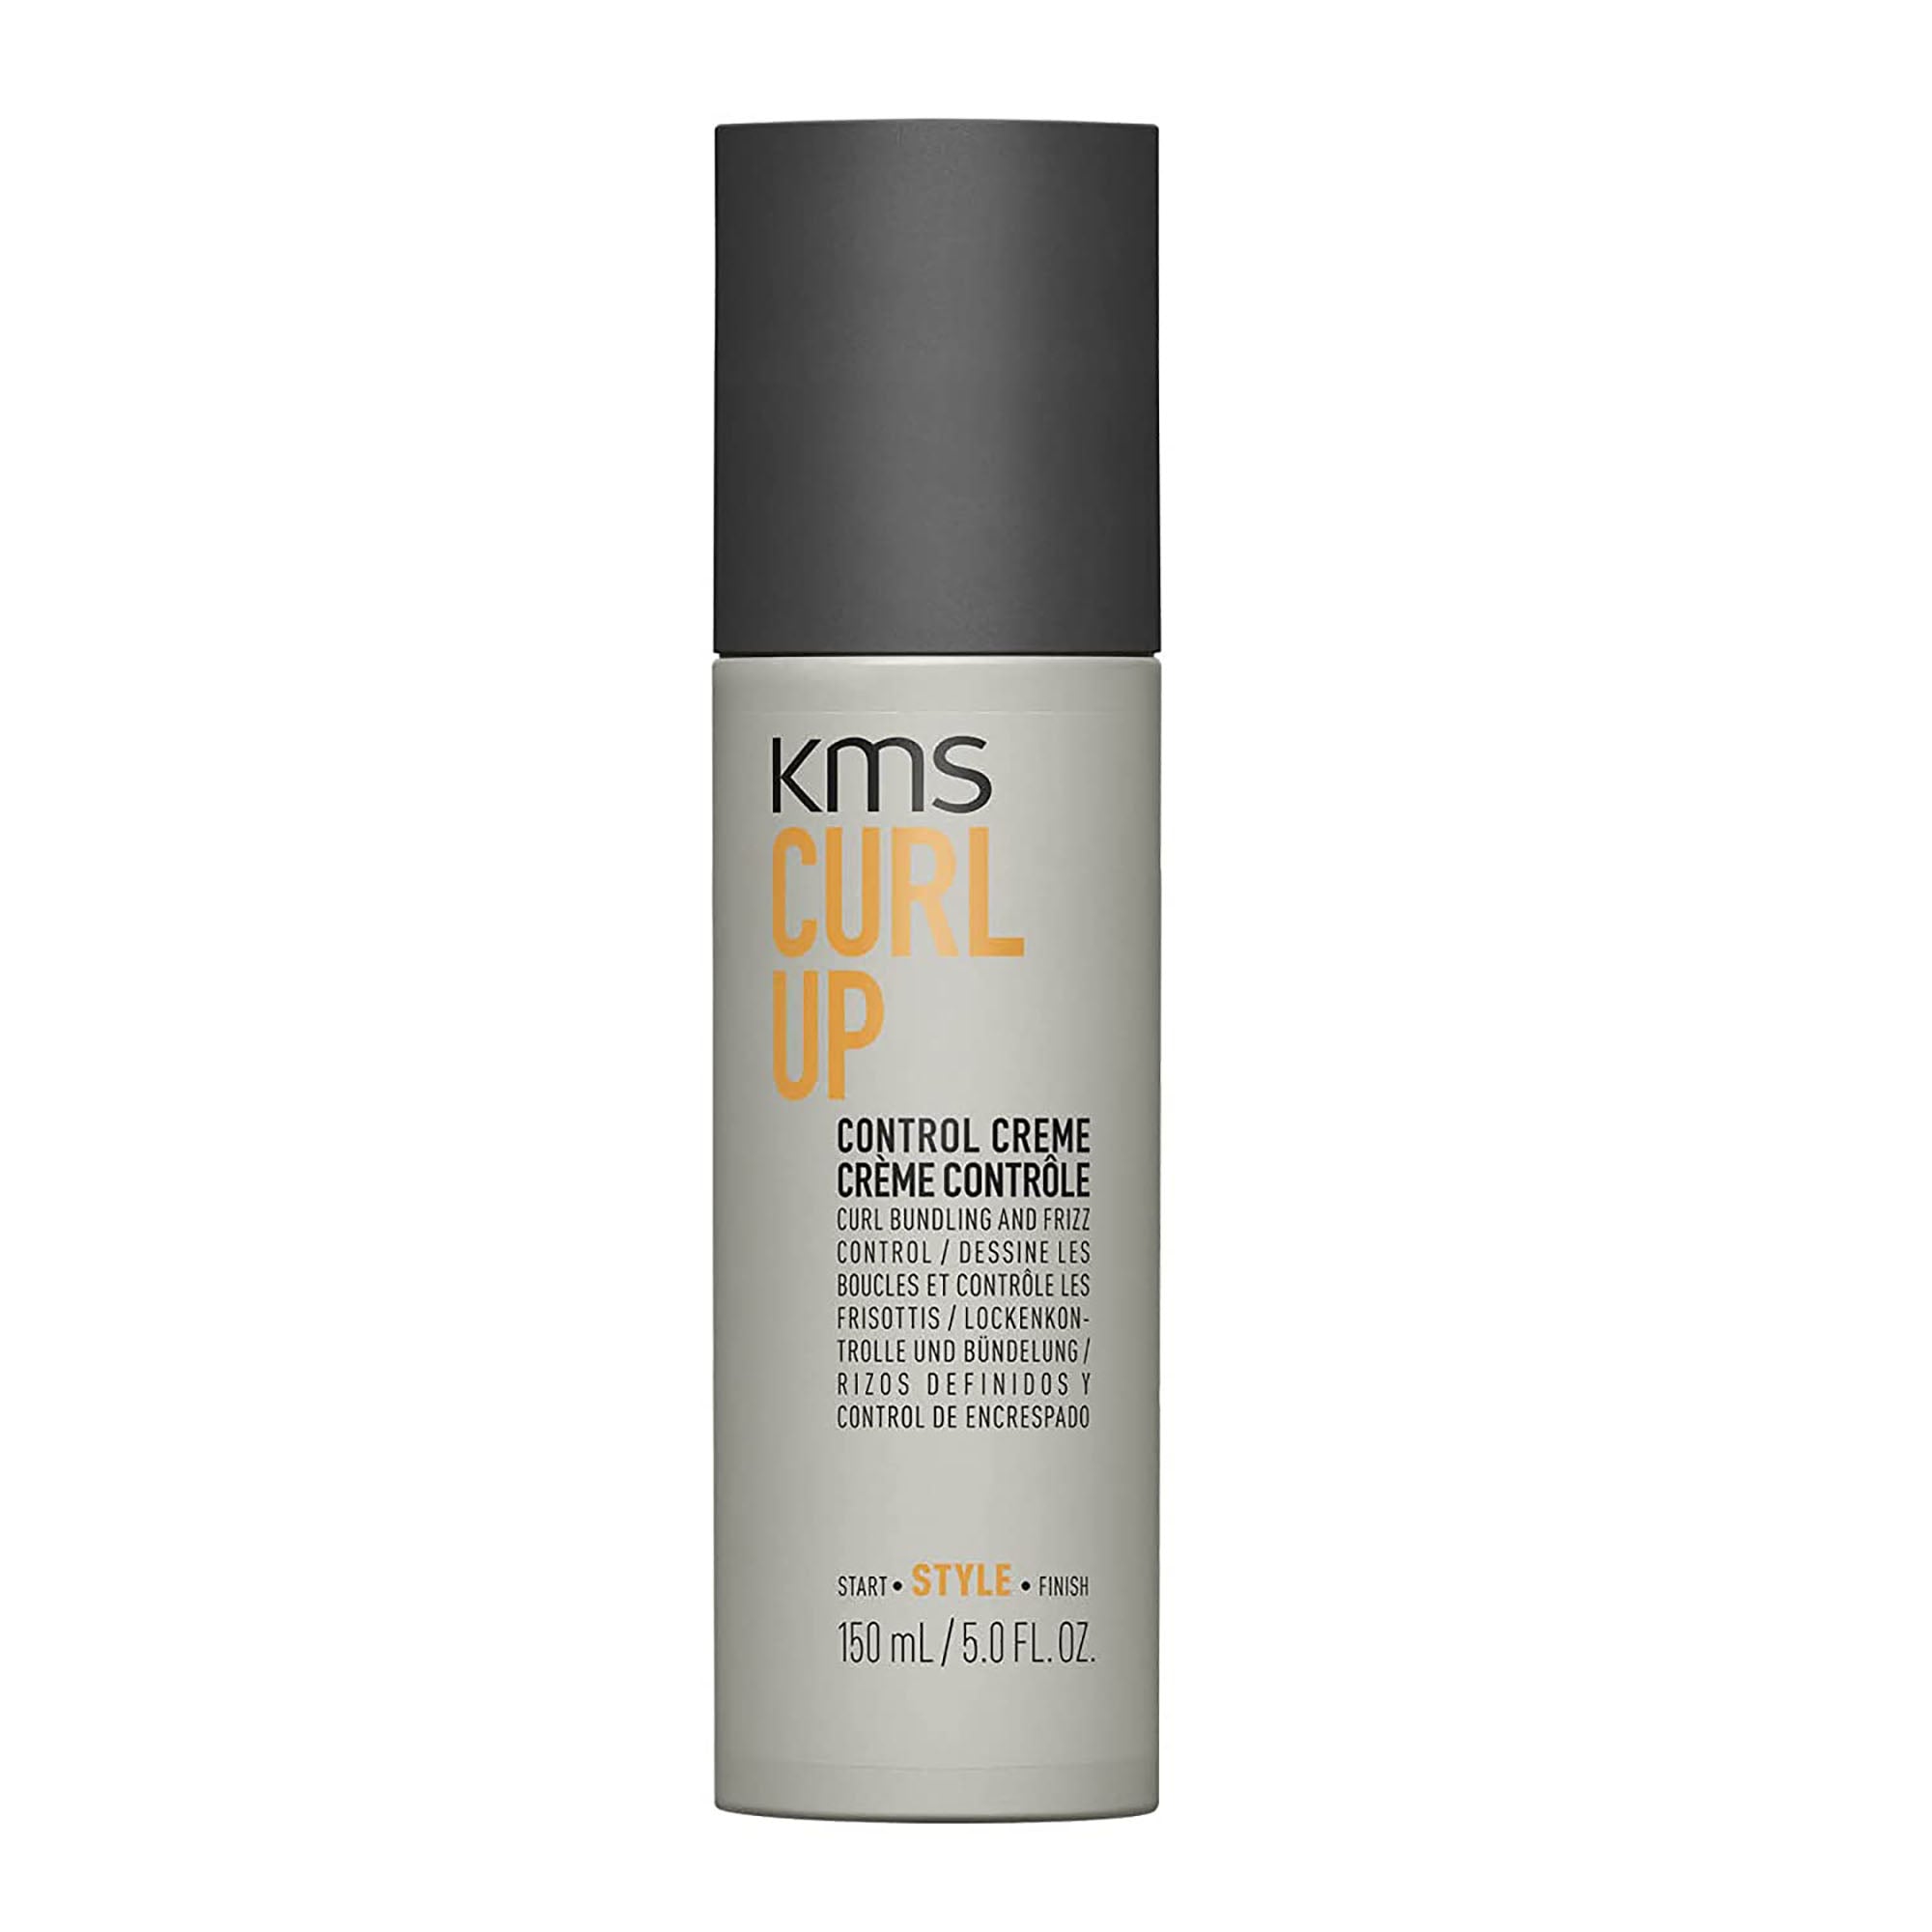 KMS CurlUp Control Crème / 5.OZ